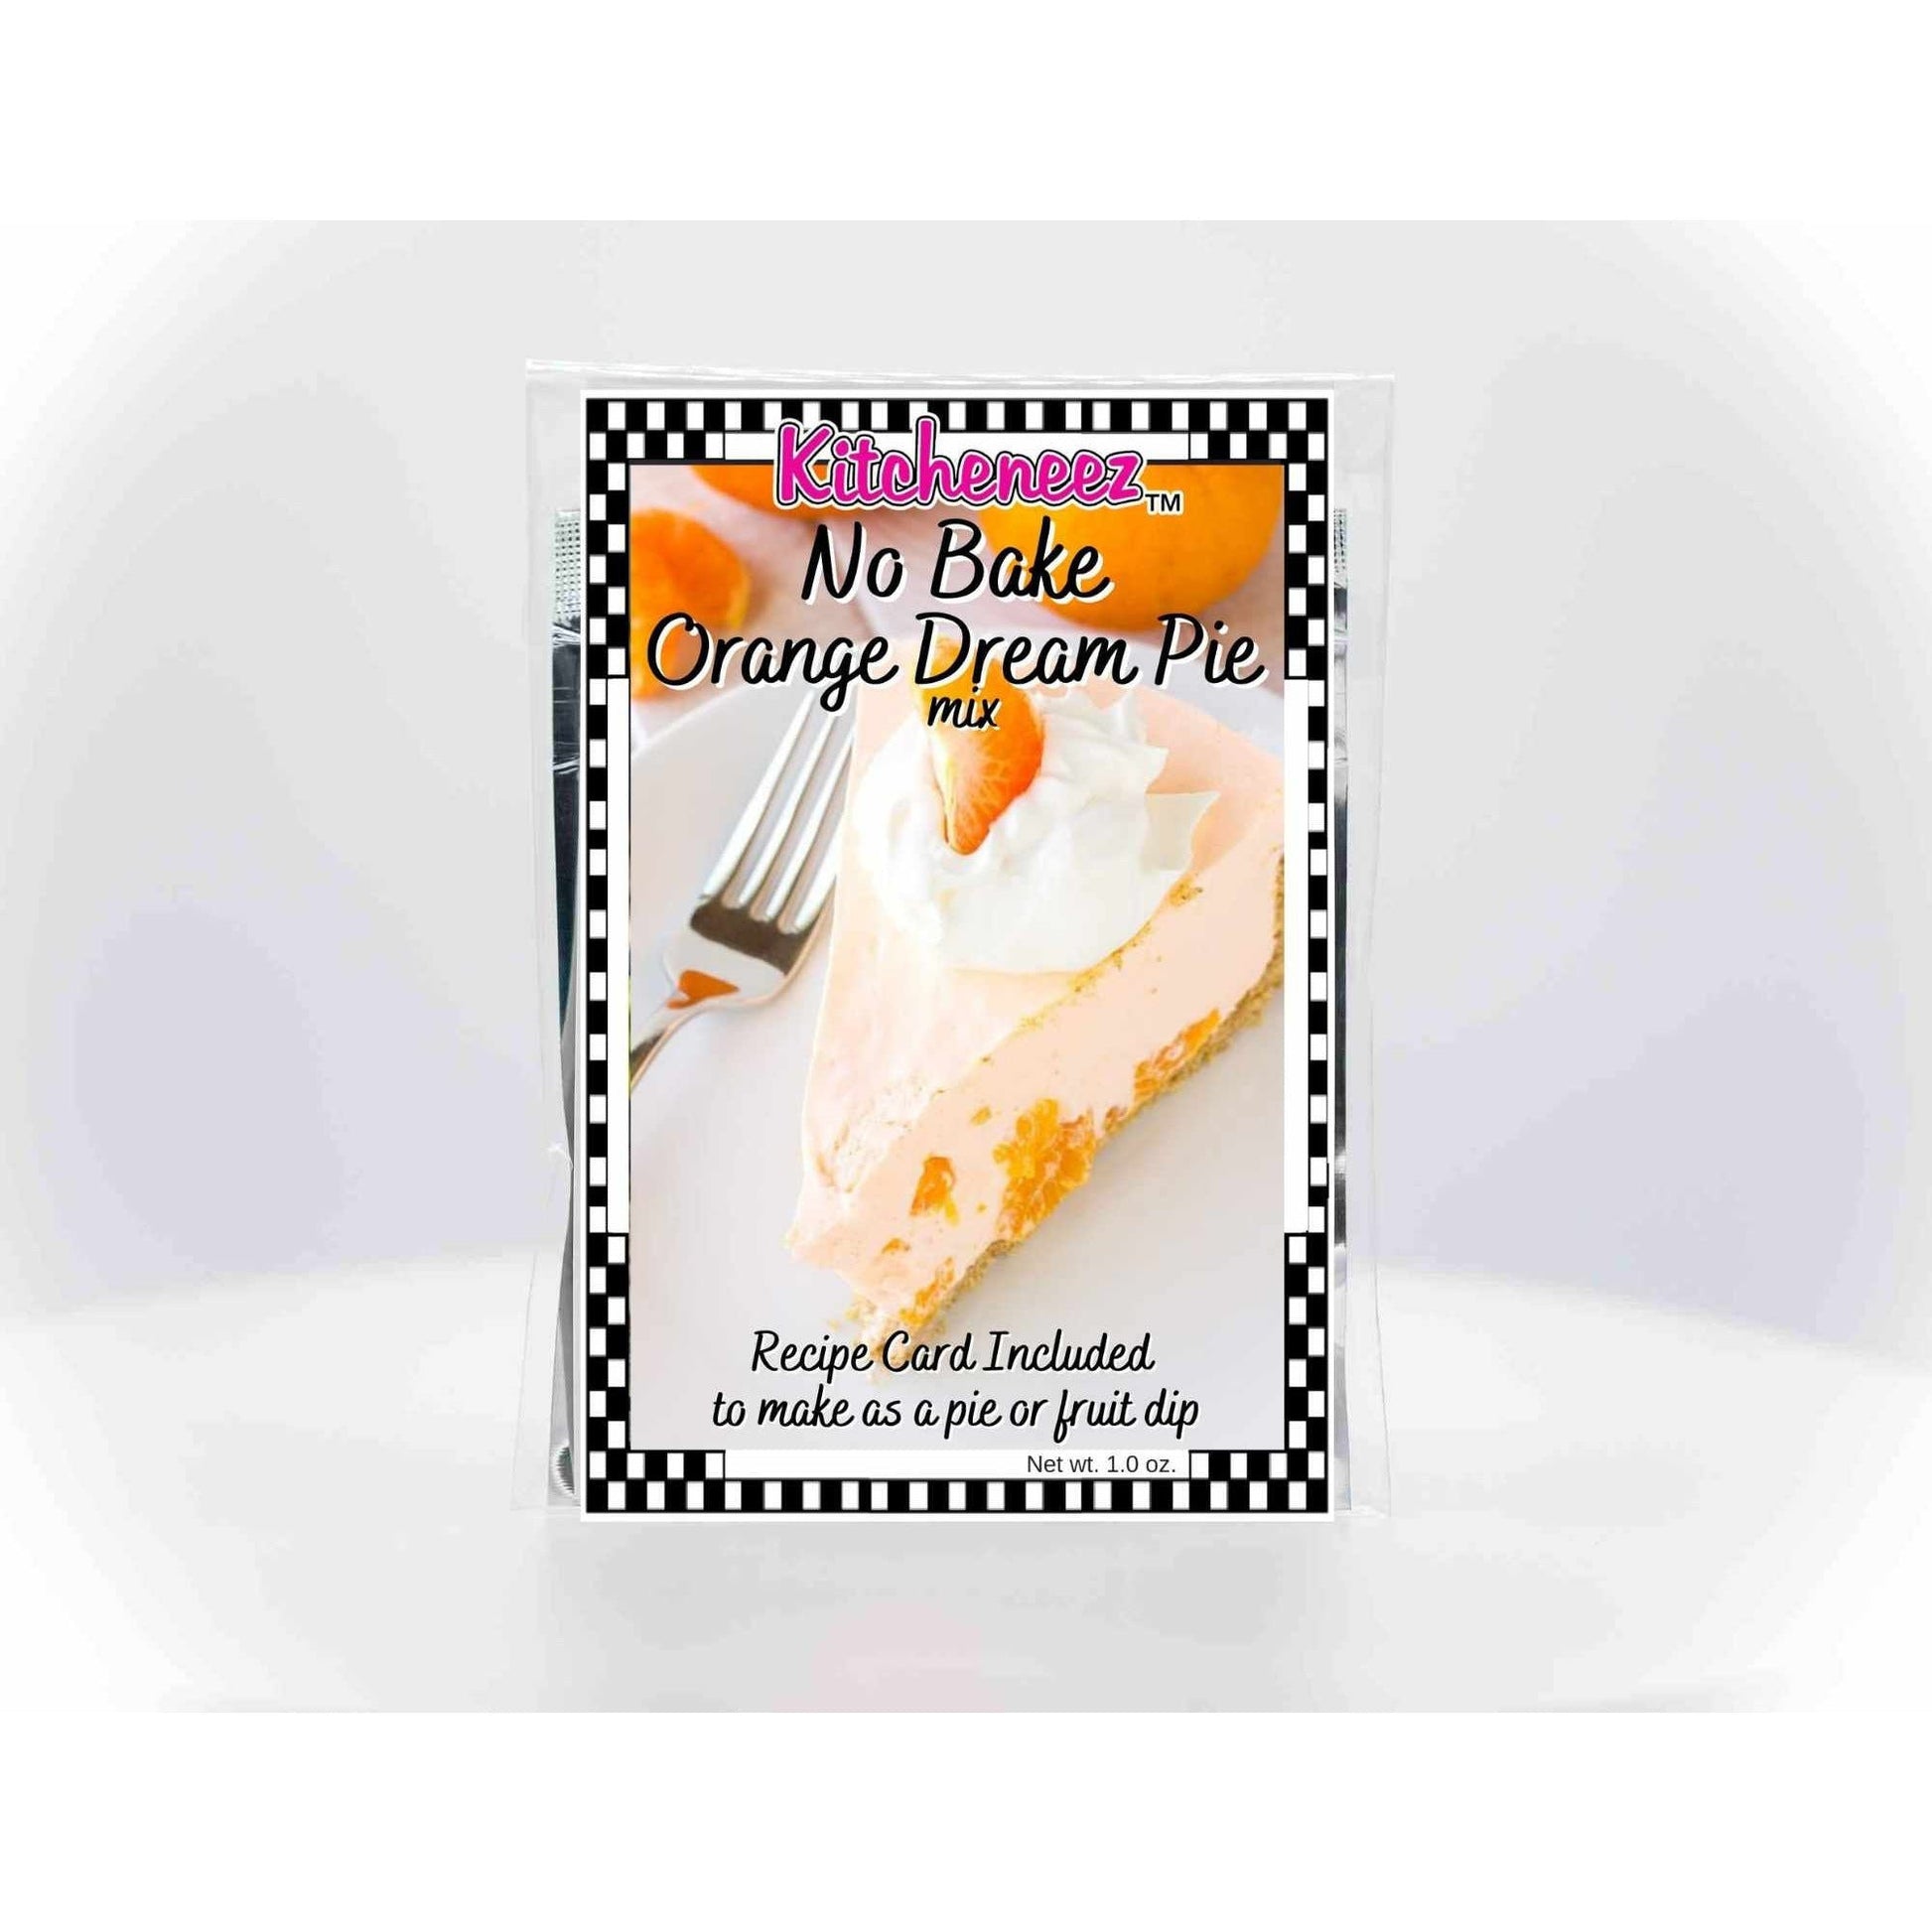 No Bake Orange Dream Pie with Quick Pie & Dip recipes included - Kitcheneez Mixes & More!